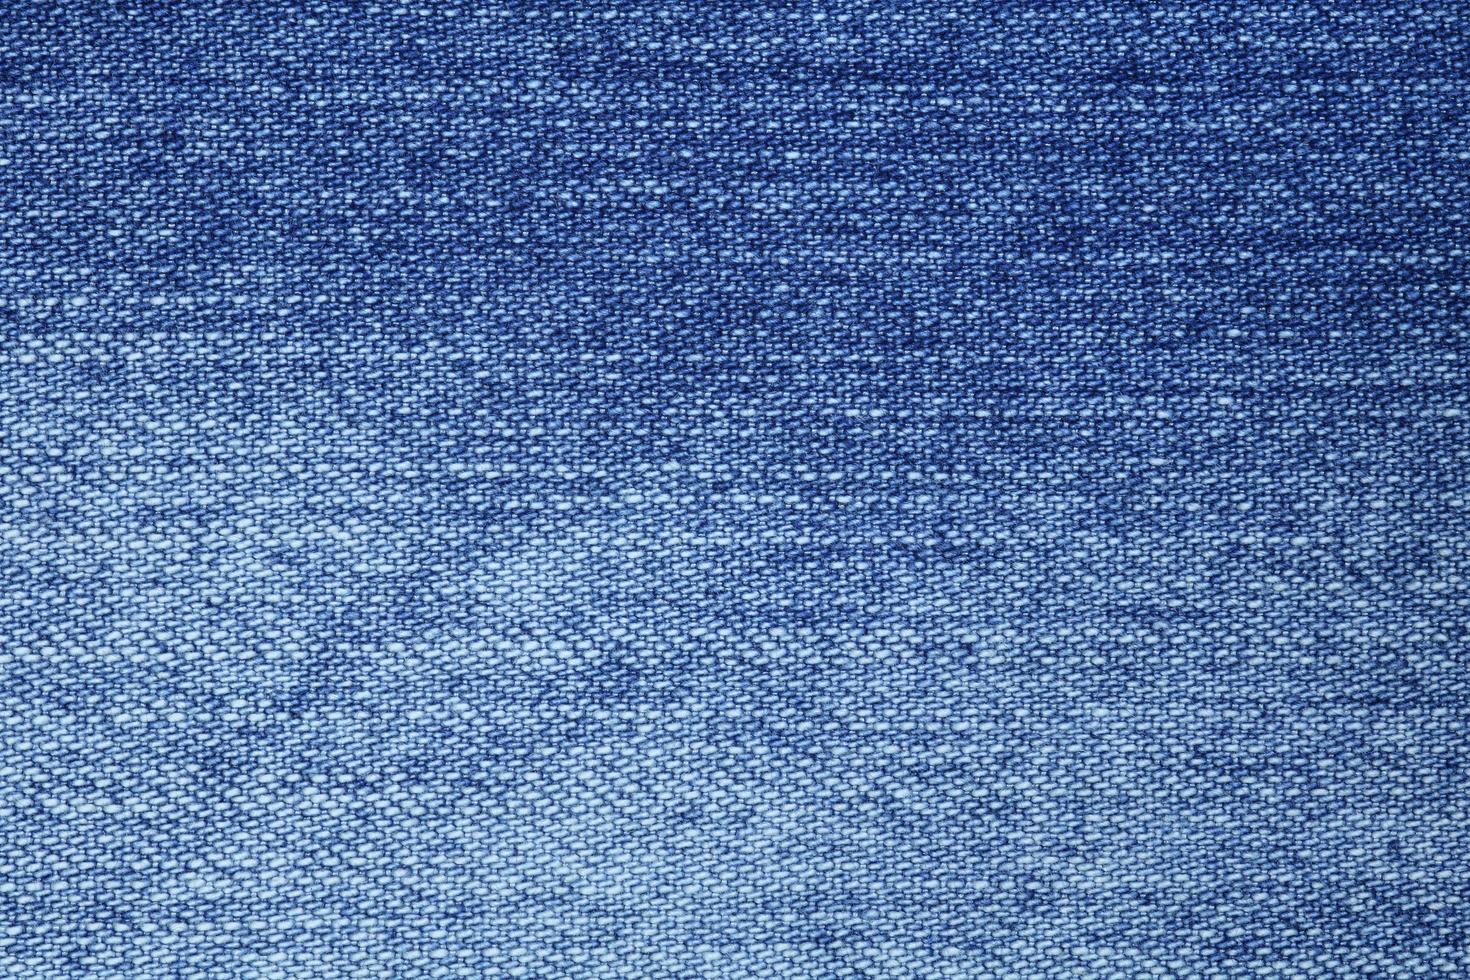 blå jean denim konsistens foto